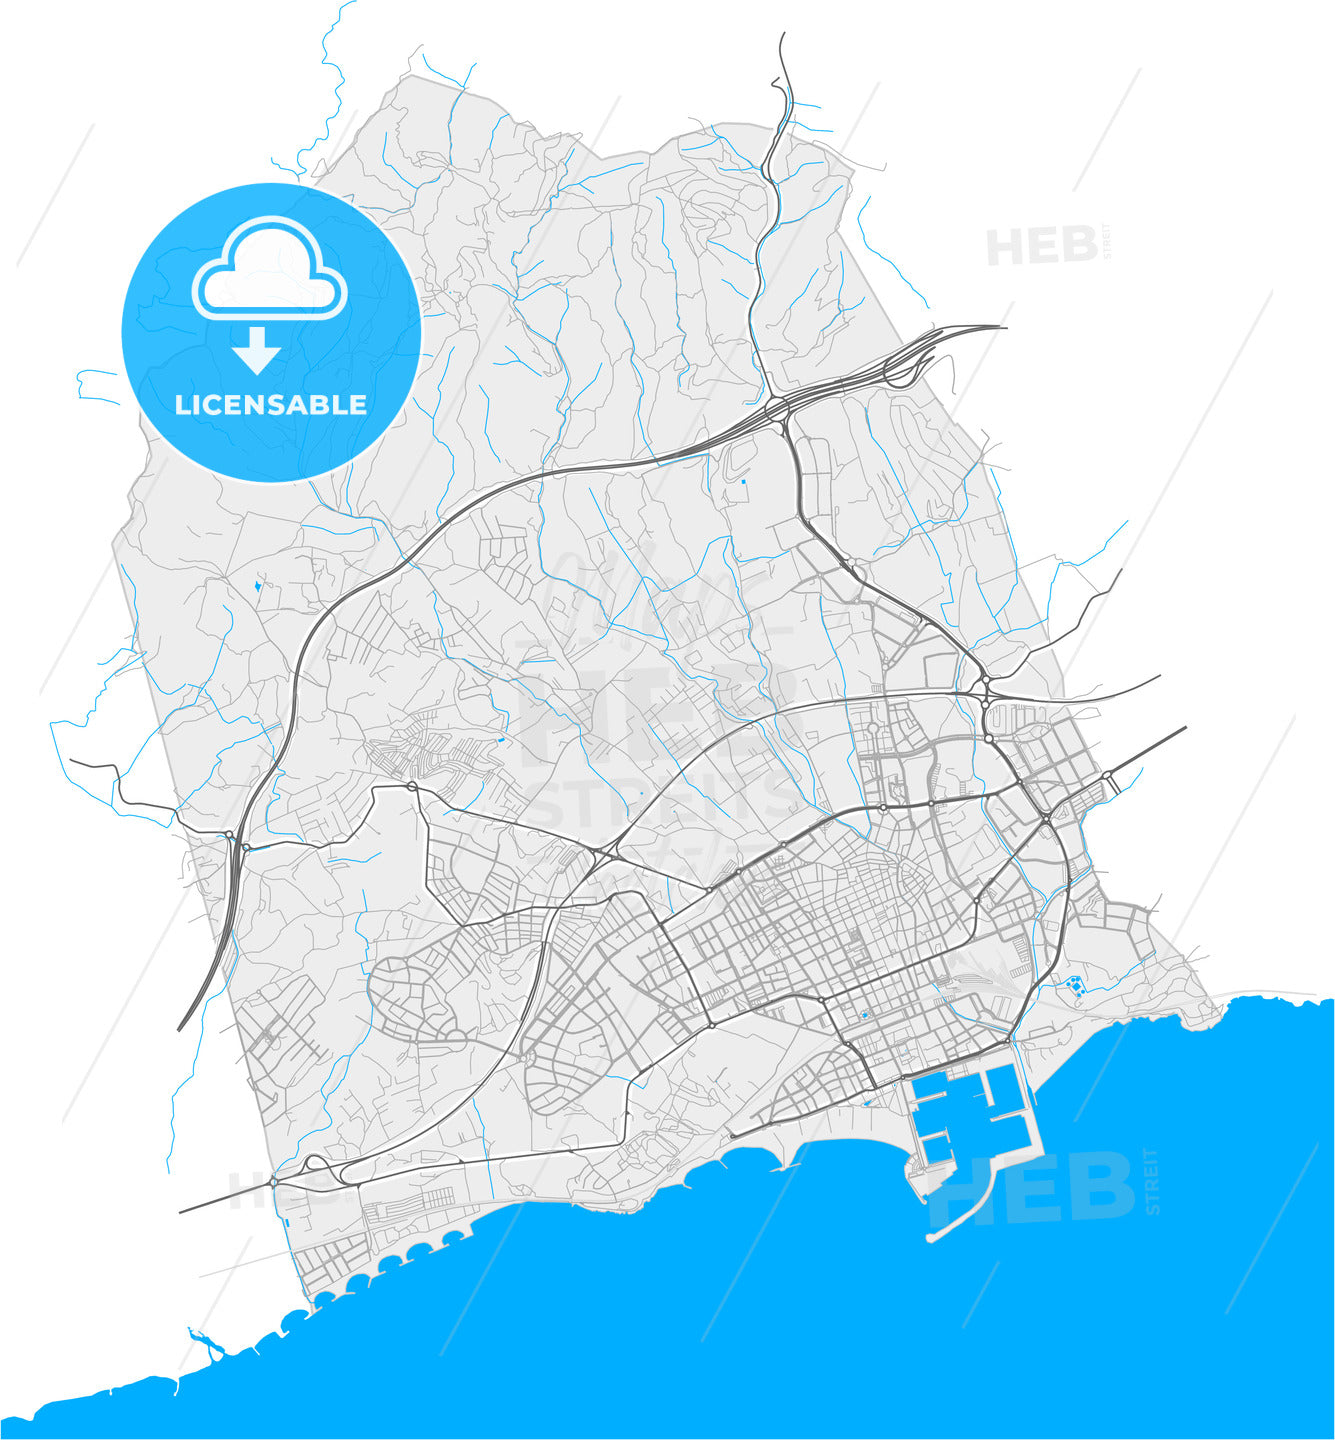 Vilanova i la Geltrú, Barcelona, Spain, high quality vector map